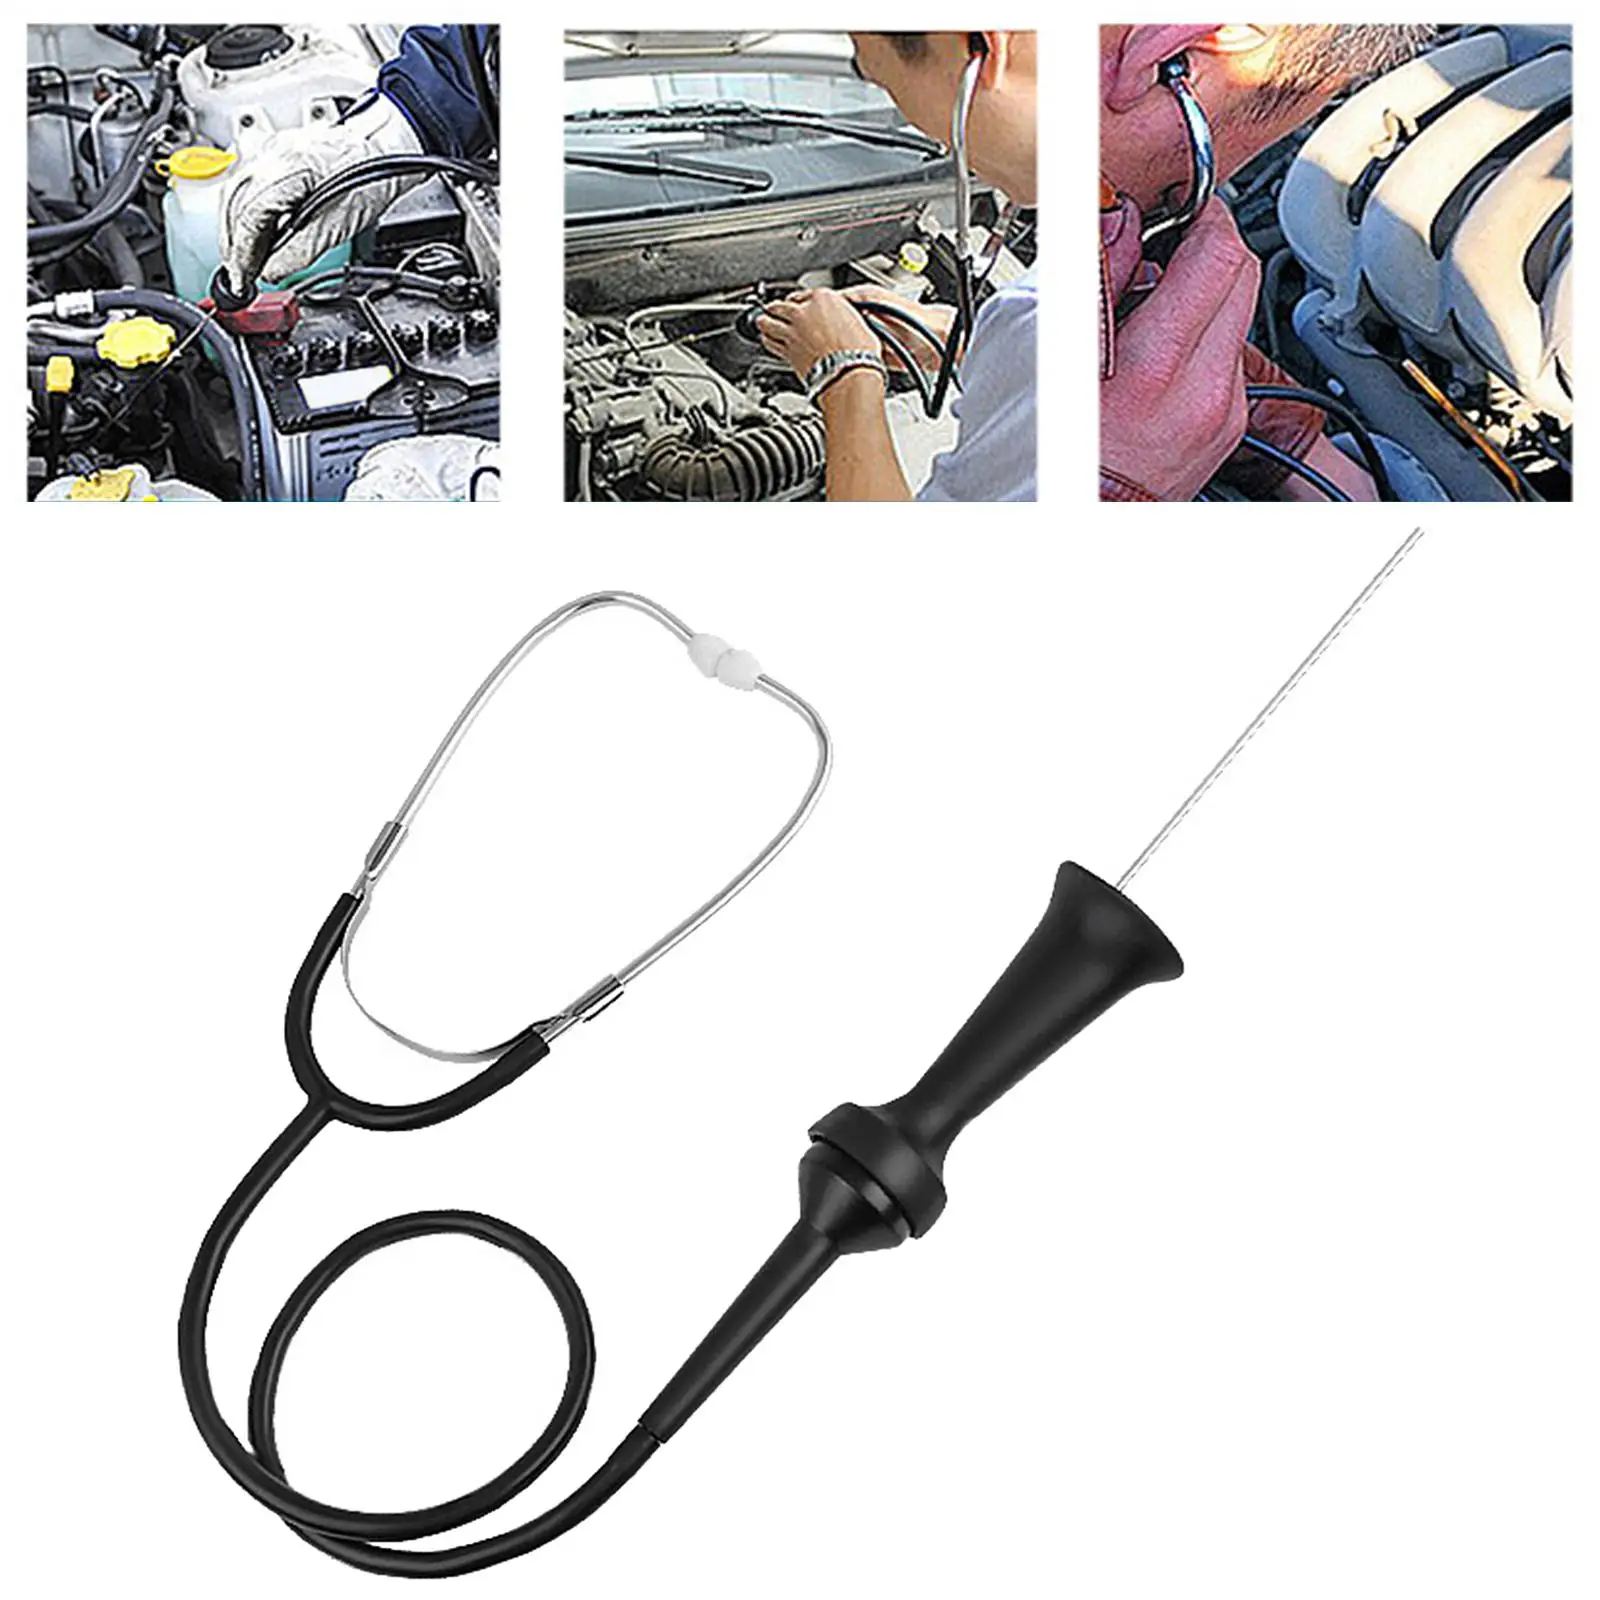 Automotive  Tool Accessories Premium Issue  Cylinder Durable Professional Mechanics